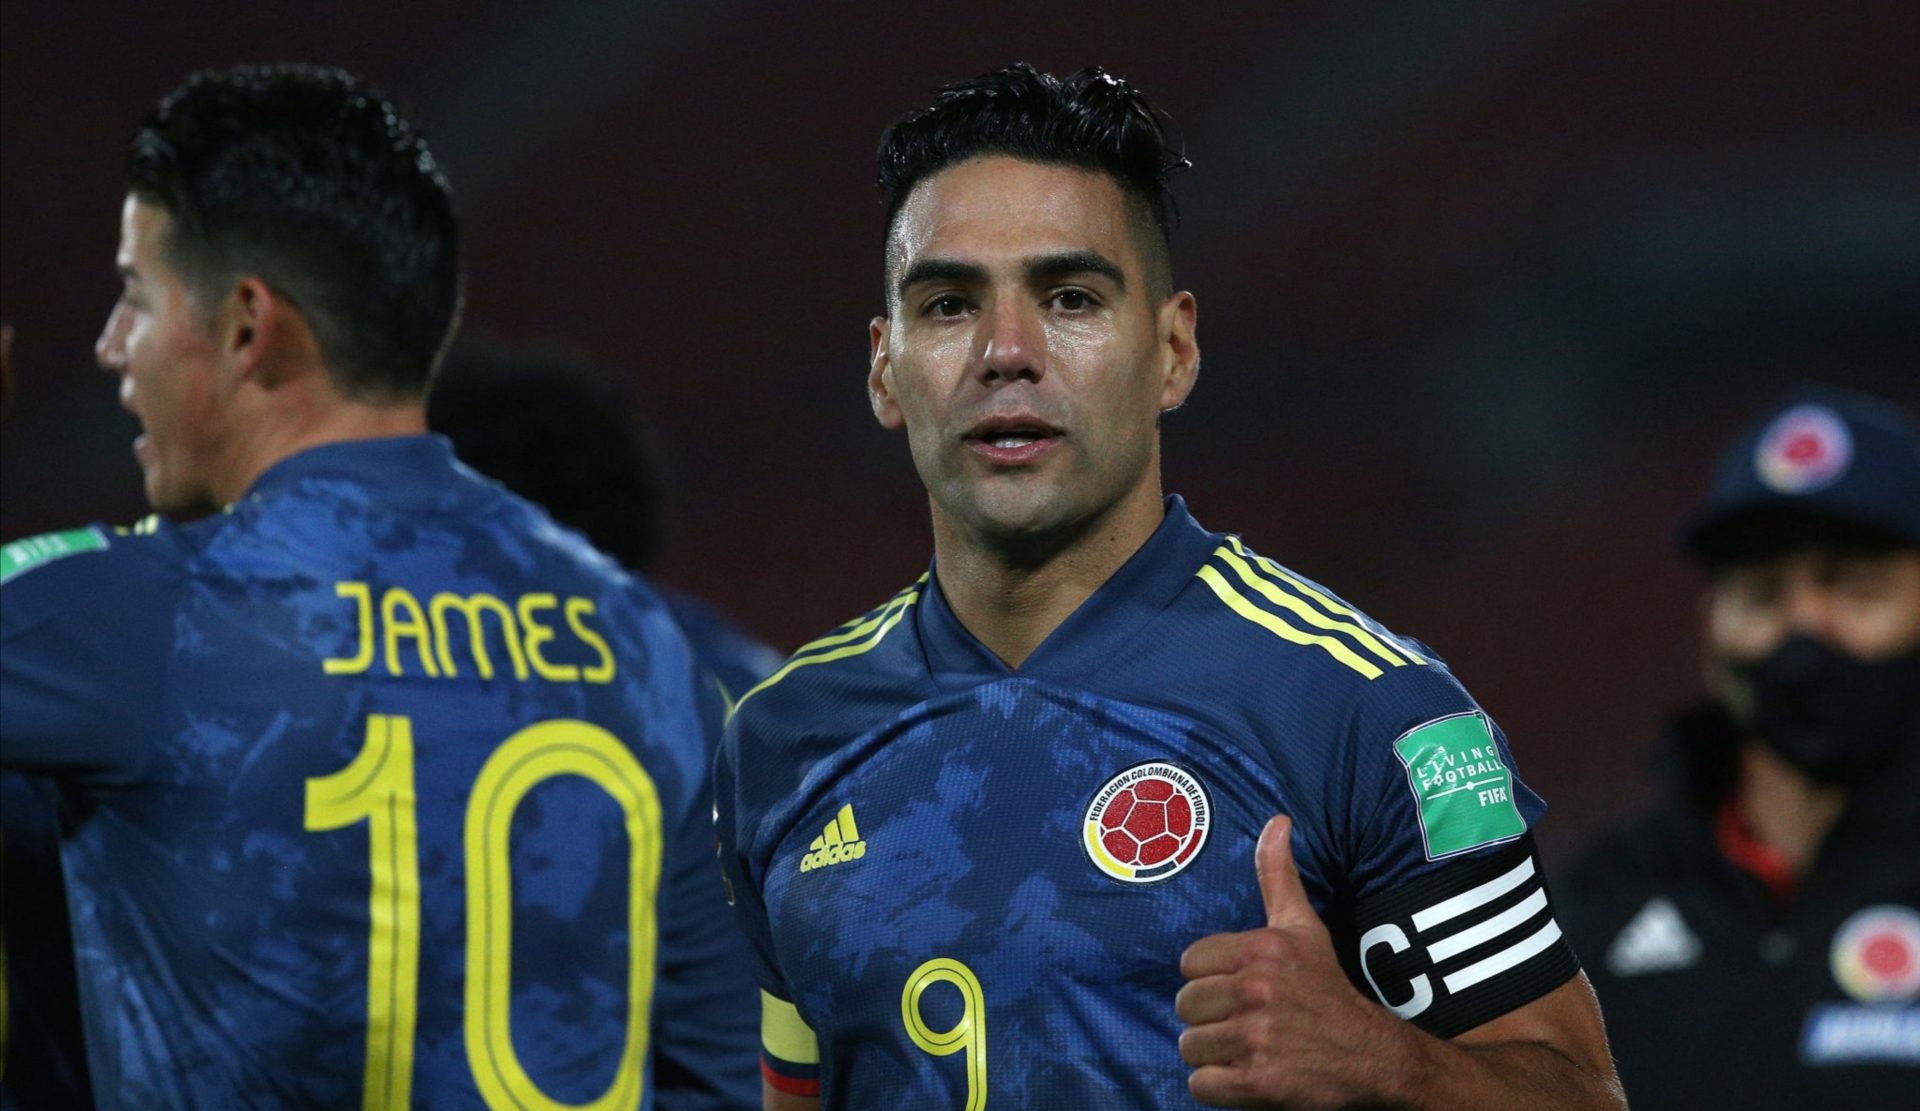 Falcao vuelve a ser figura para Colombia